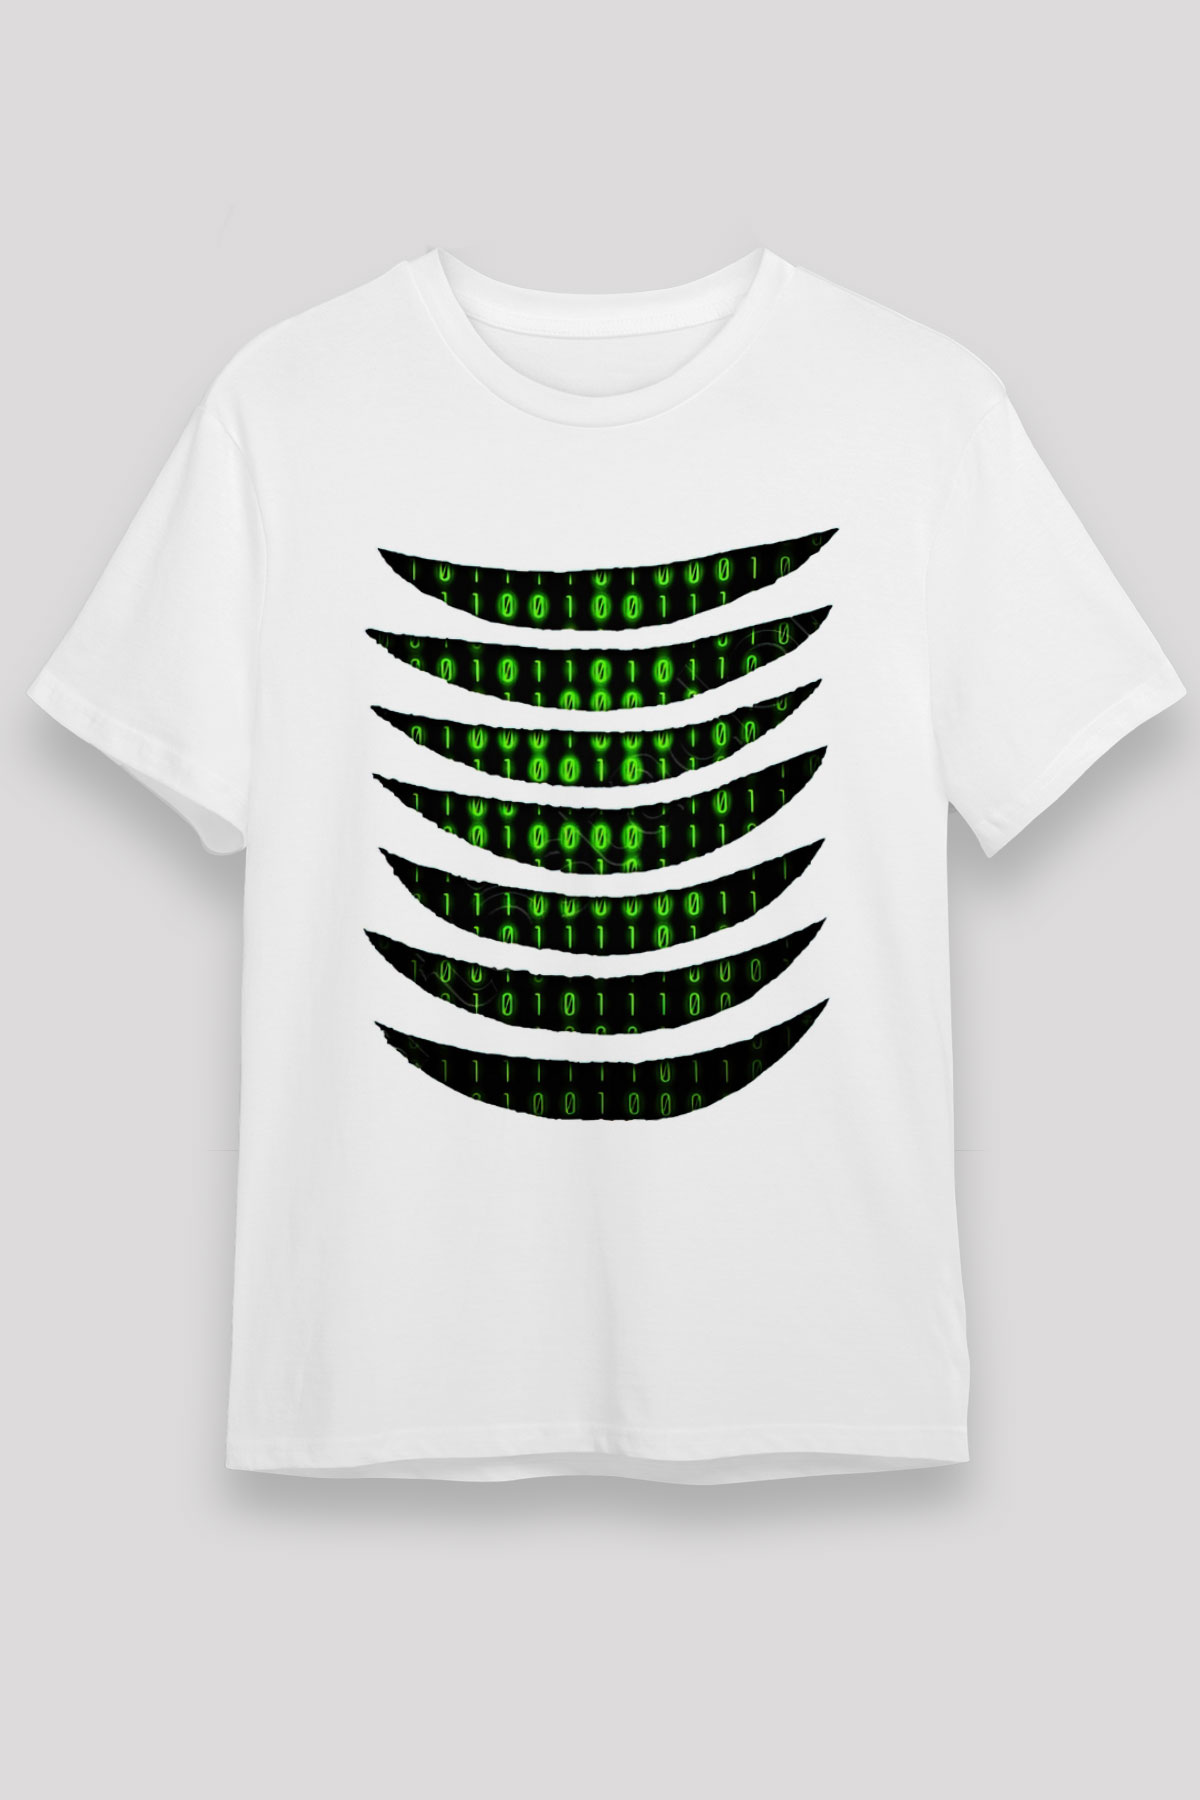 The Matrix  T shirt,Movie , Tv and Games Tshirt 04